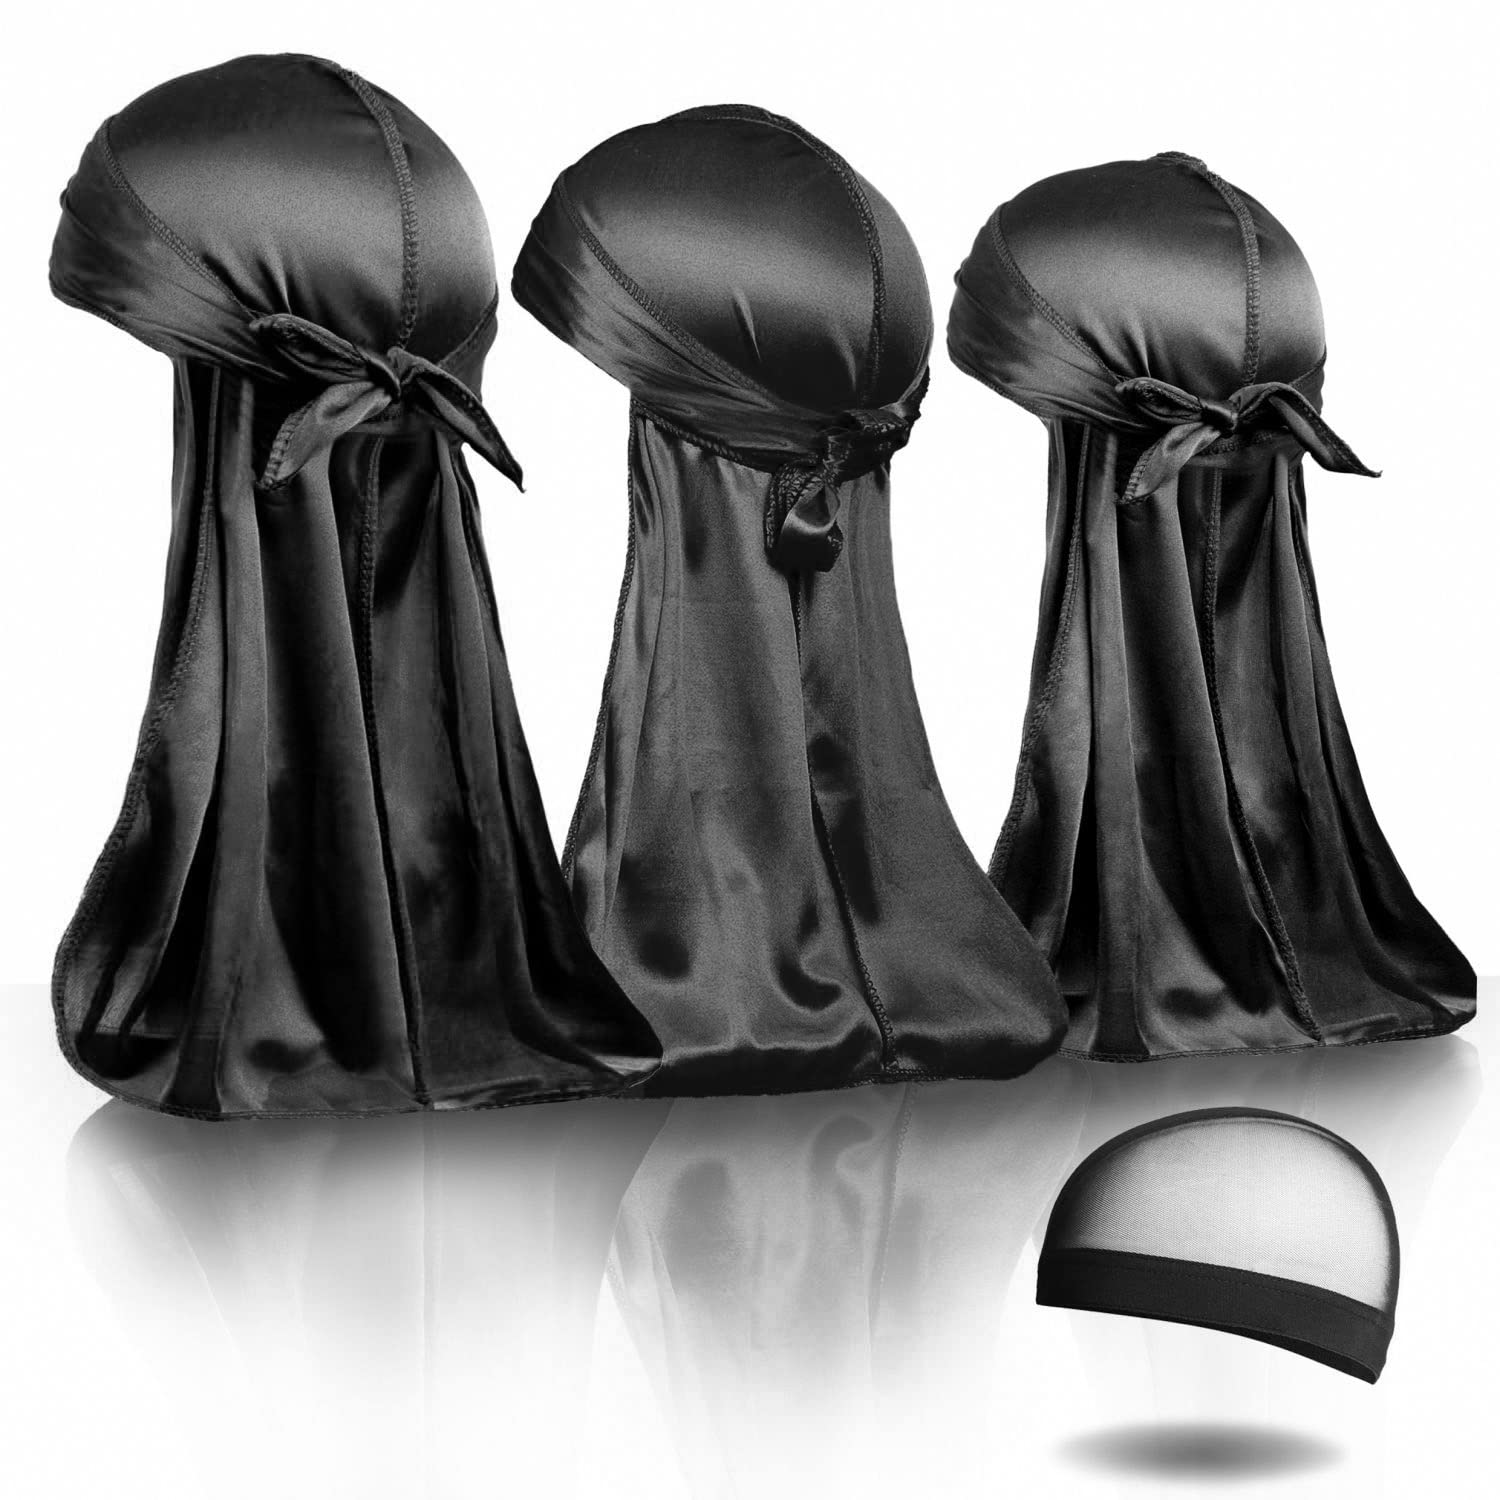 Supaze 3Pcs Durag, Durags for Men Silky, Silk Durag for Men Women 360 Waves  Extra Long Tail with 1 Wave Cap (3*Black) Black, Black, Black